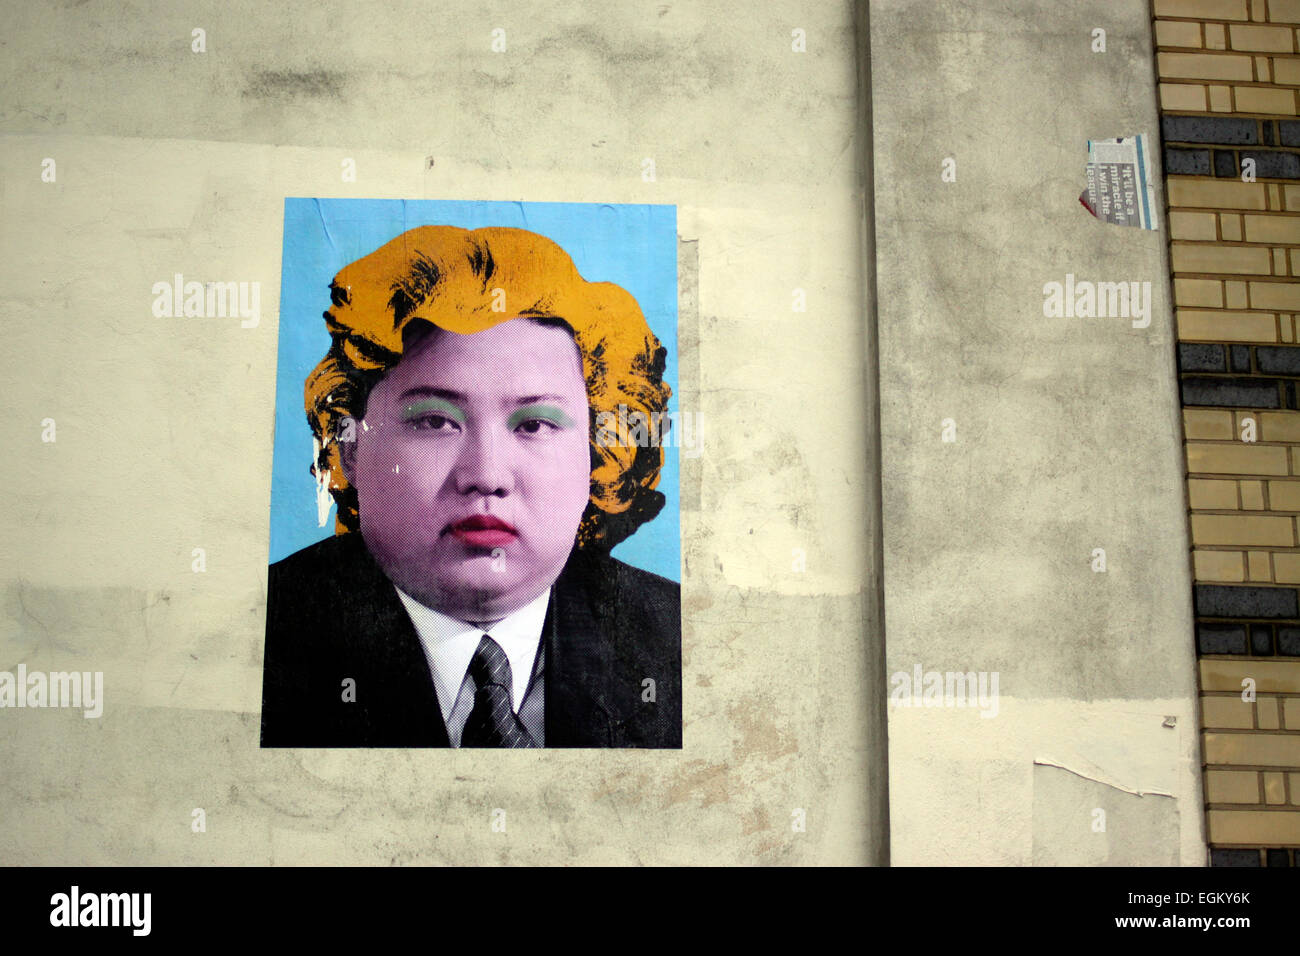 The North Korean leader Kim Jong-un as Marilyn Monroe on a piece of street art in Shoreditch, East London Stock Photo